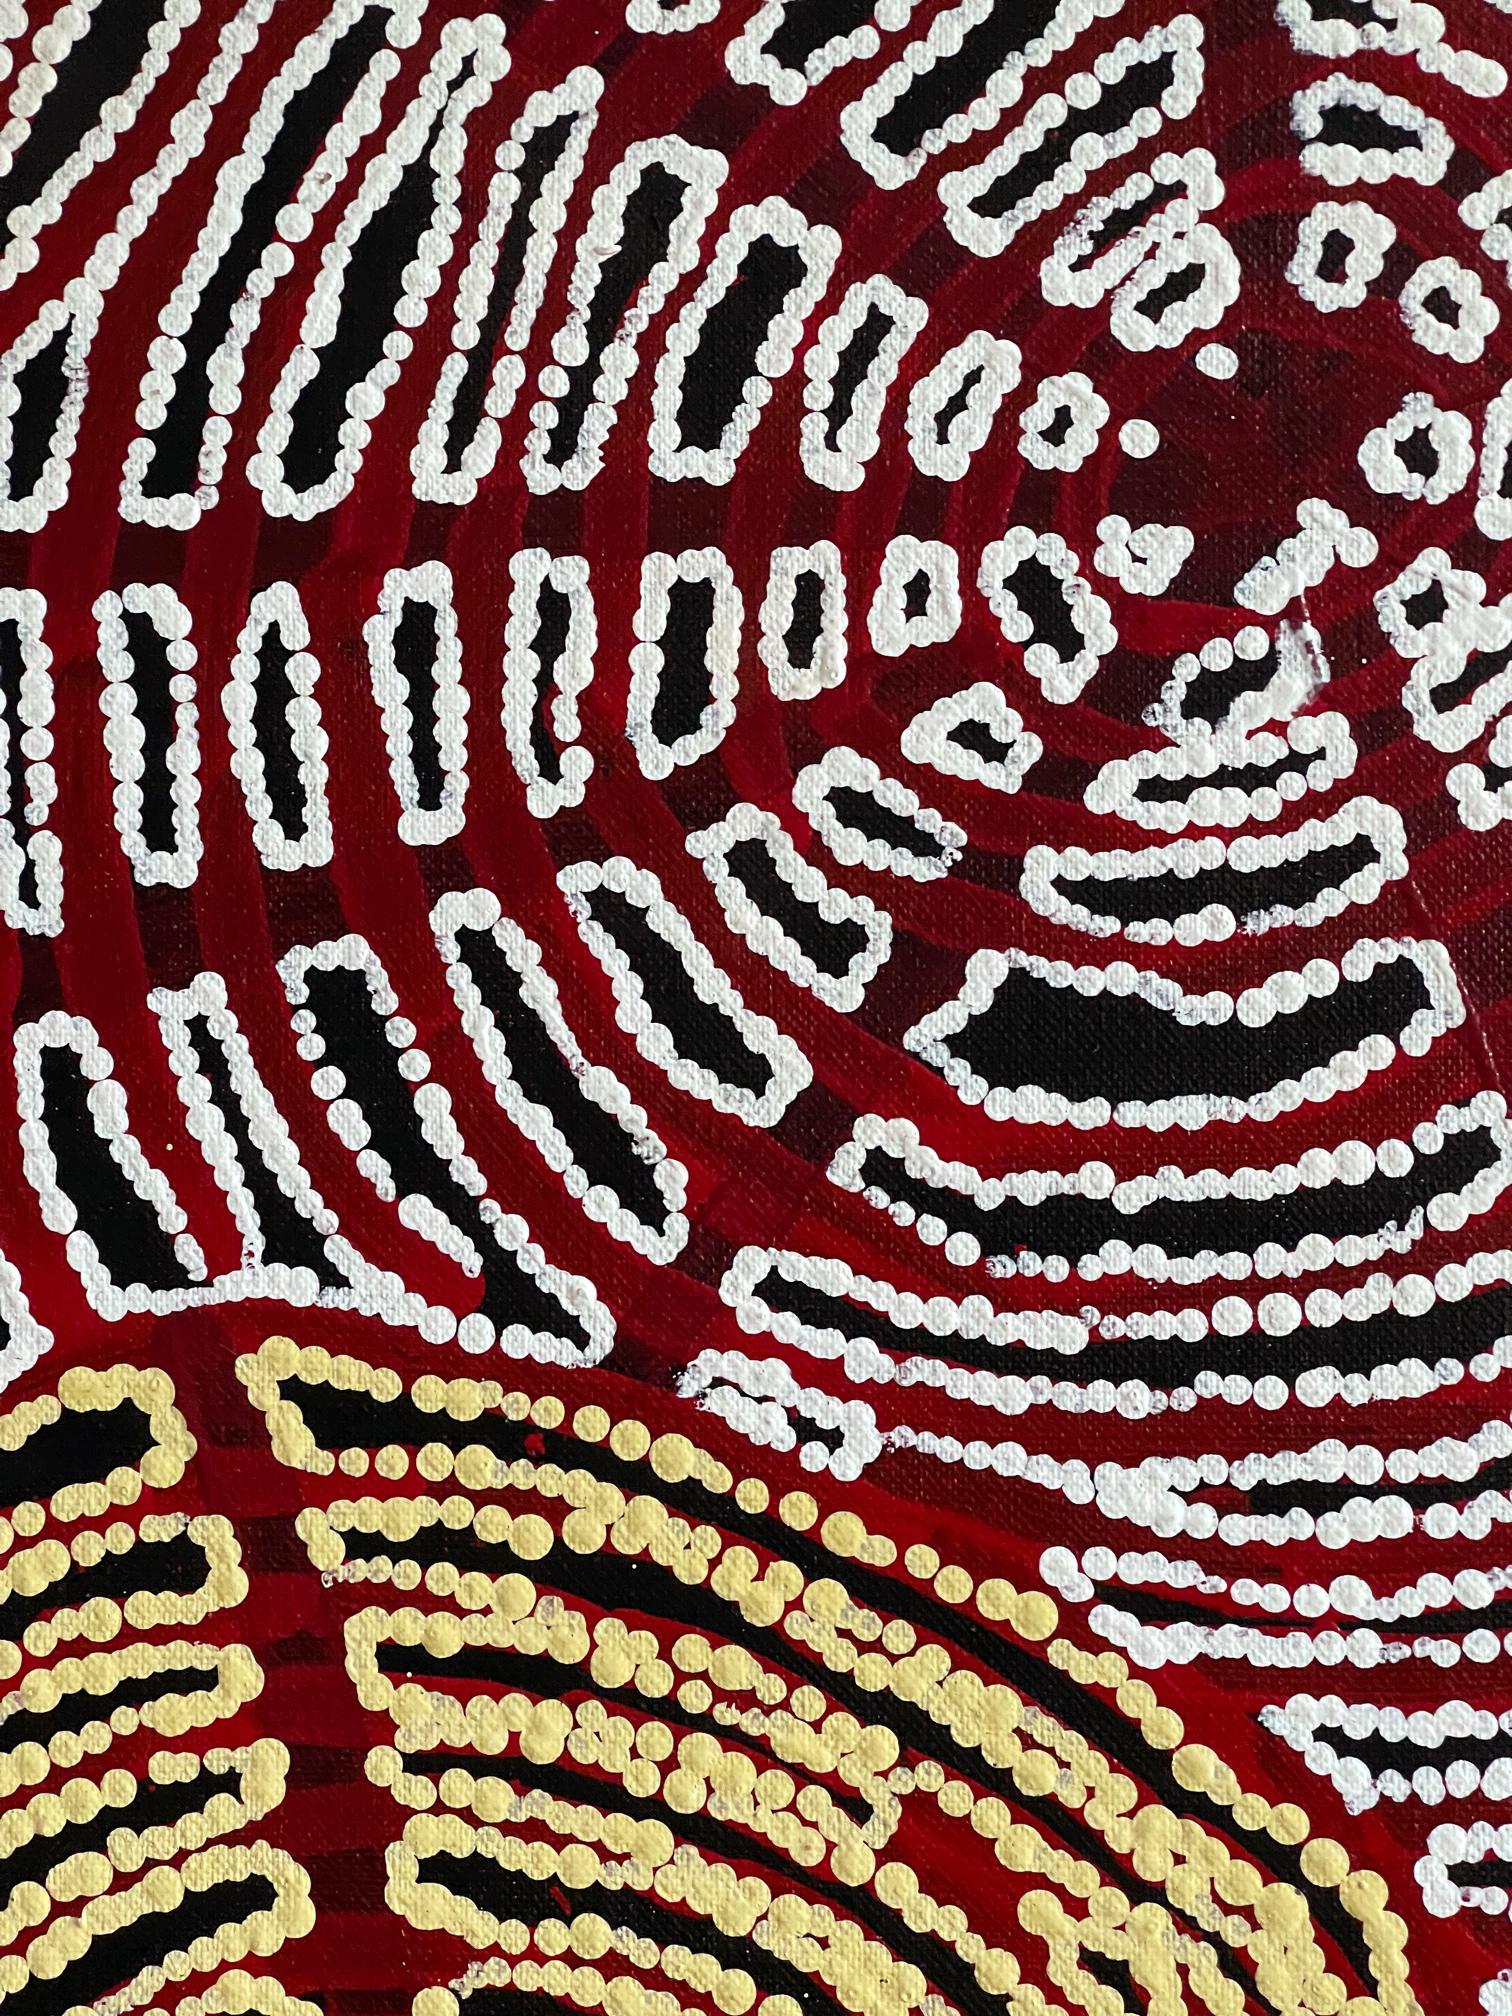 Contemporary Australian Aboriginal Painting by Walangkura Napanangka For Sale 1